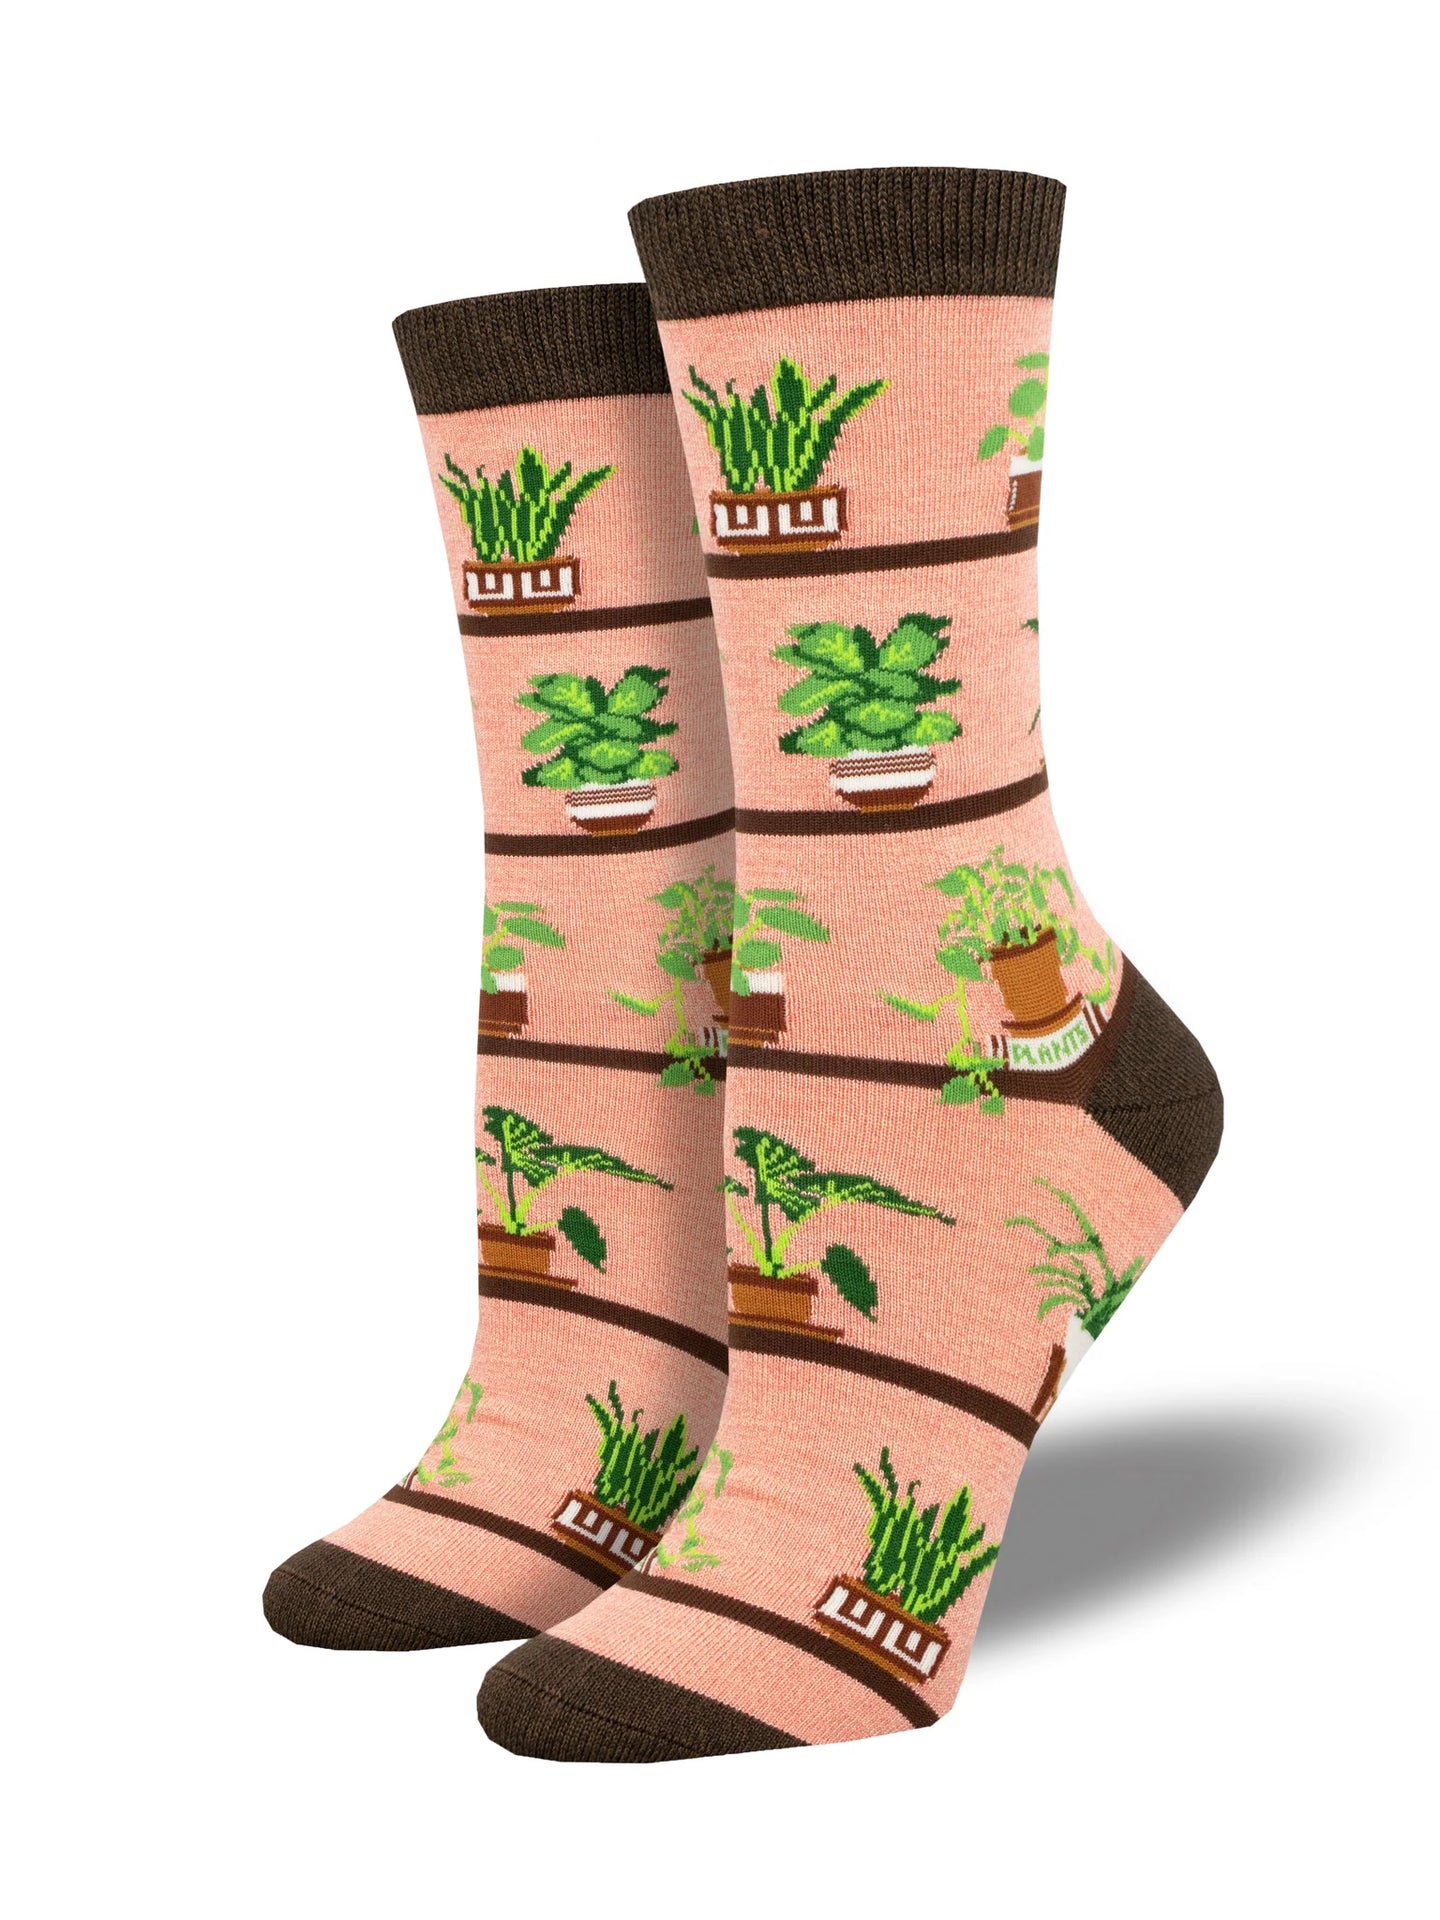 Houseplants Socks